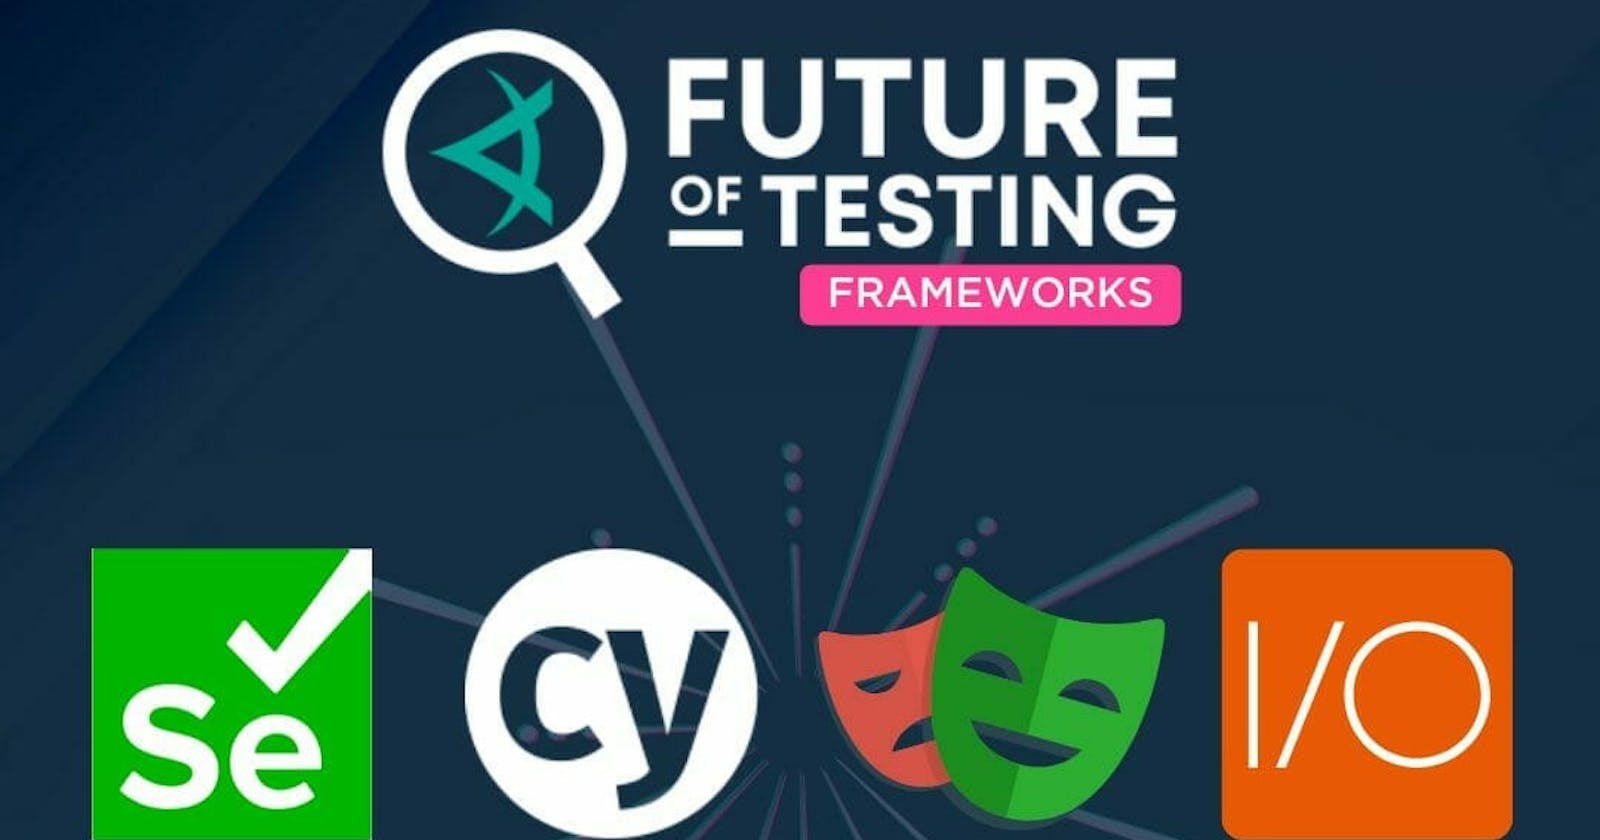 Future of Testing frameworks - A virtual event